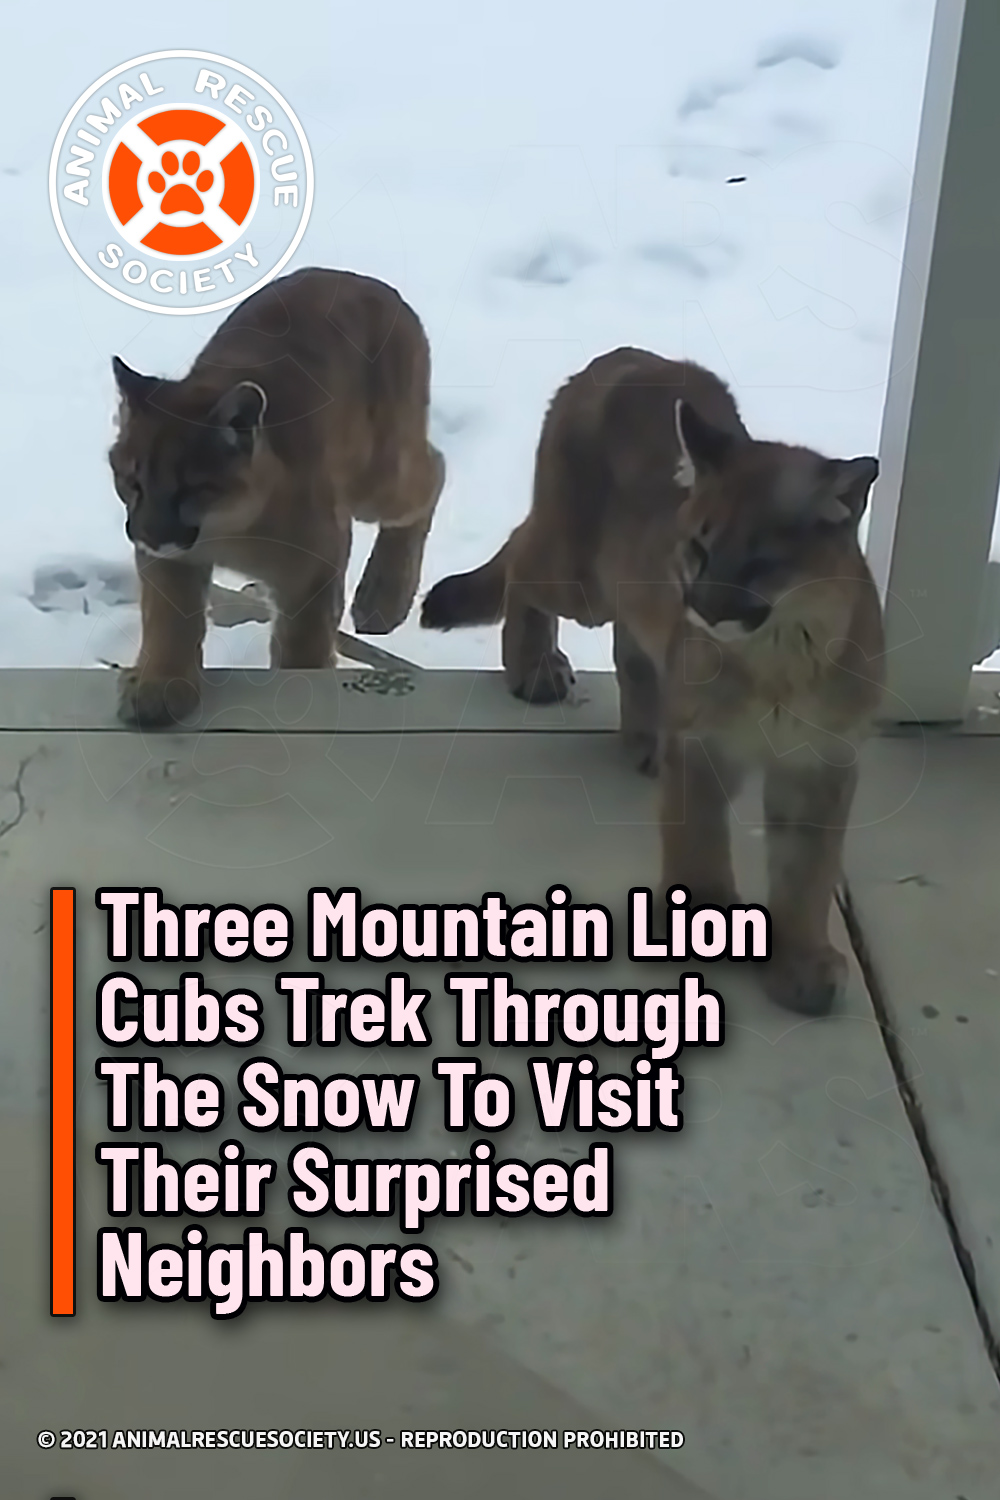 Three Mountain Lion Cubs Trek Through The Snow To Visit Their Surprised Neighbors